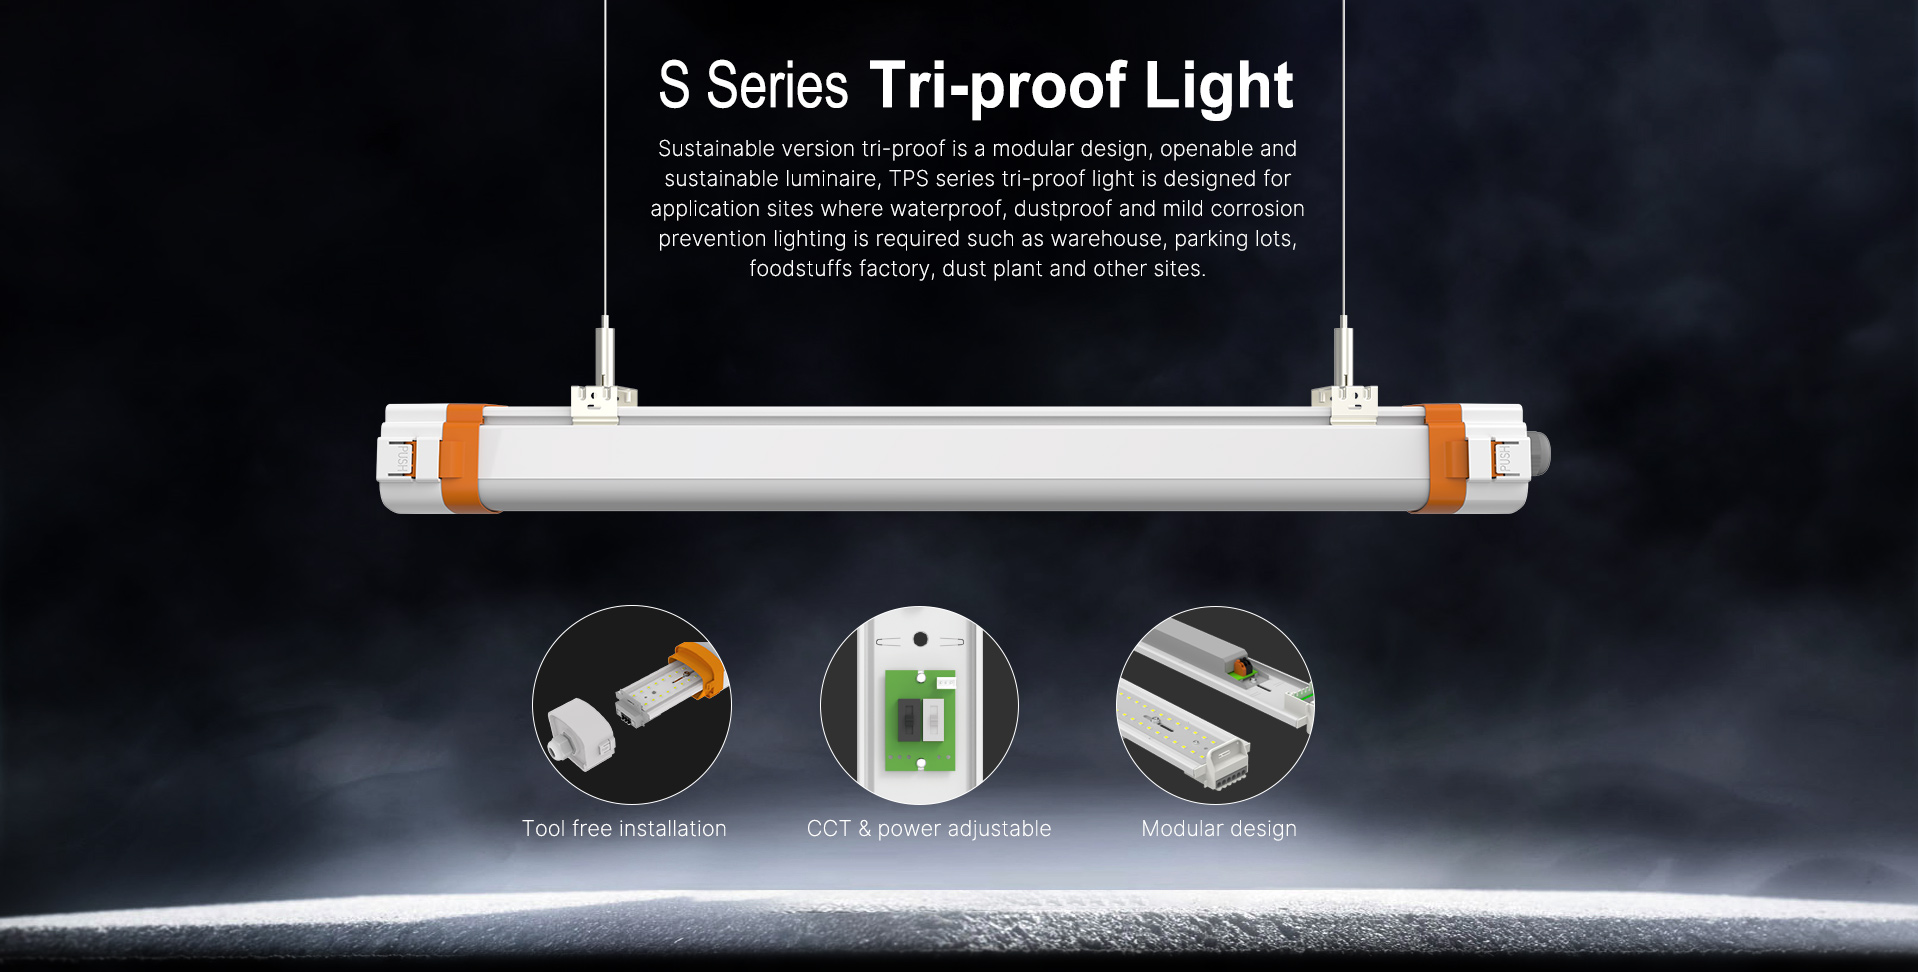 s series tri-proof light